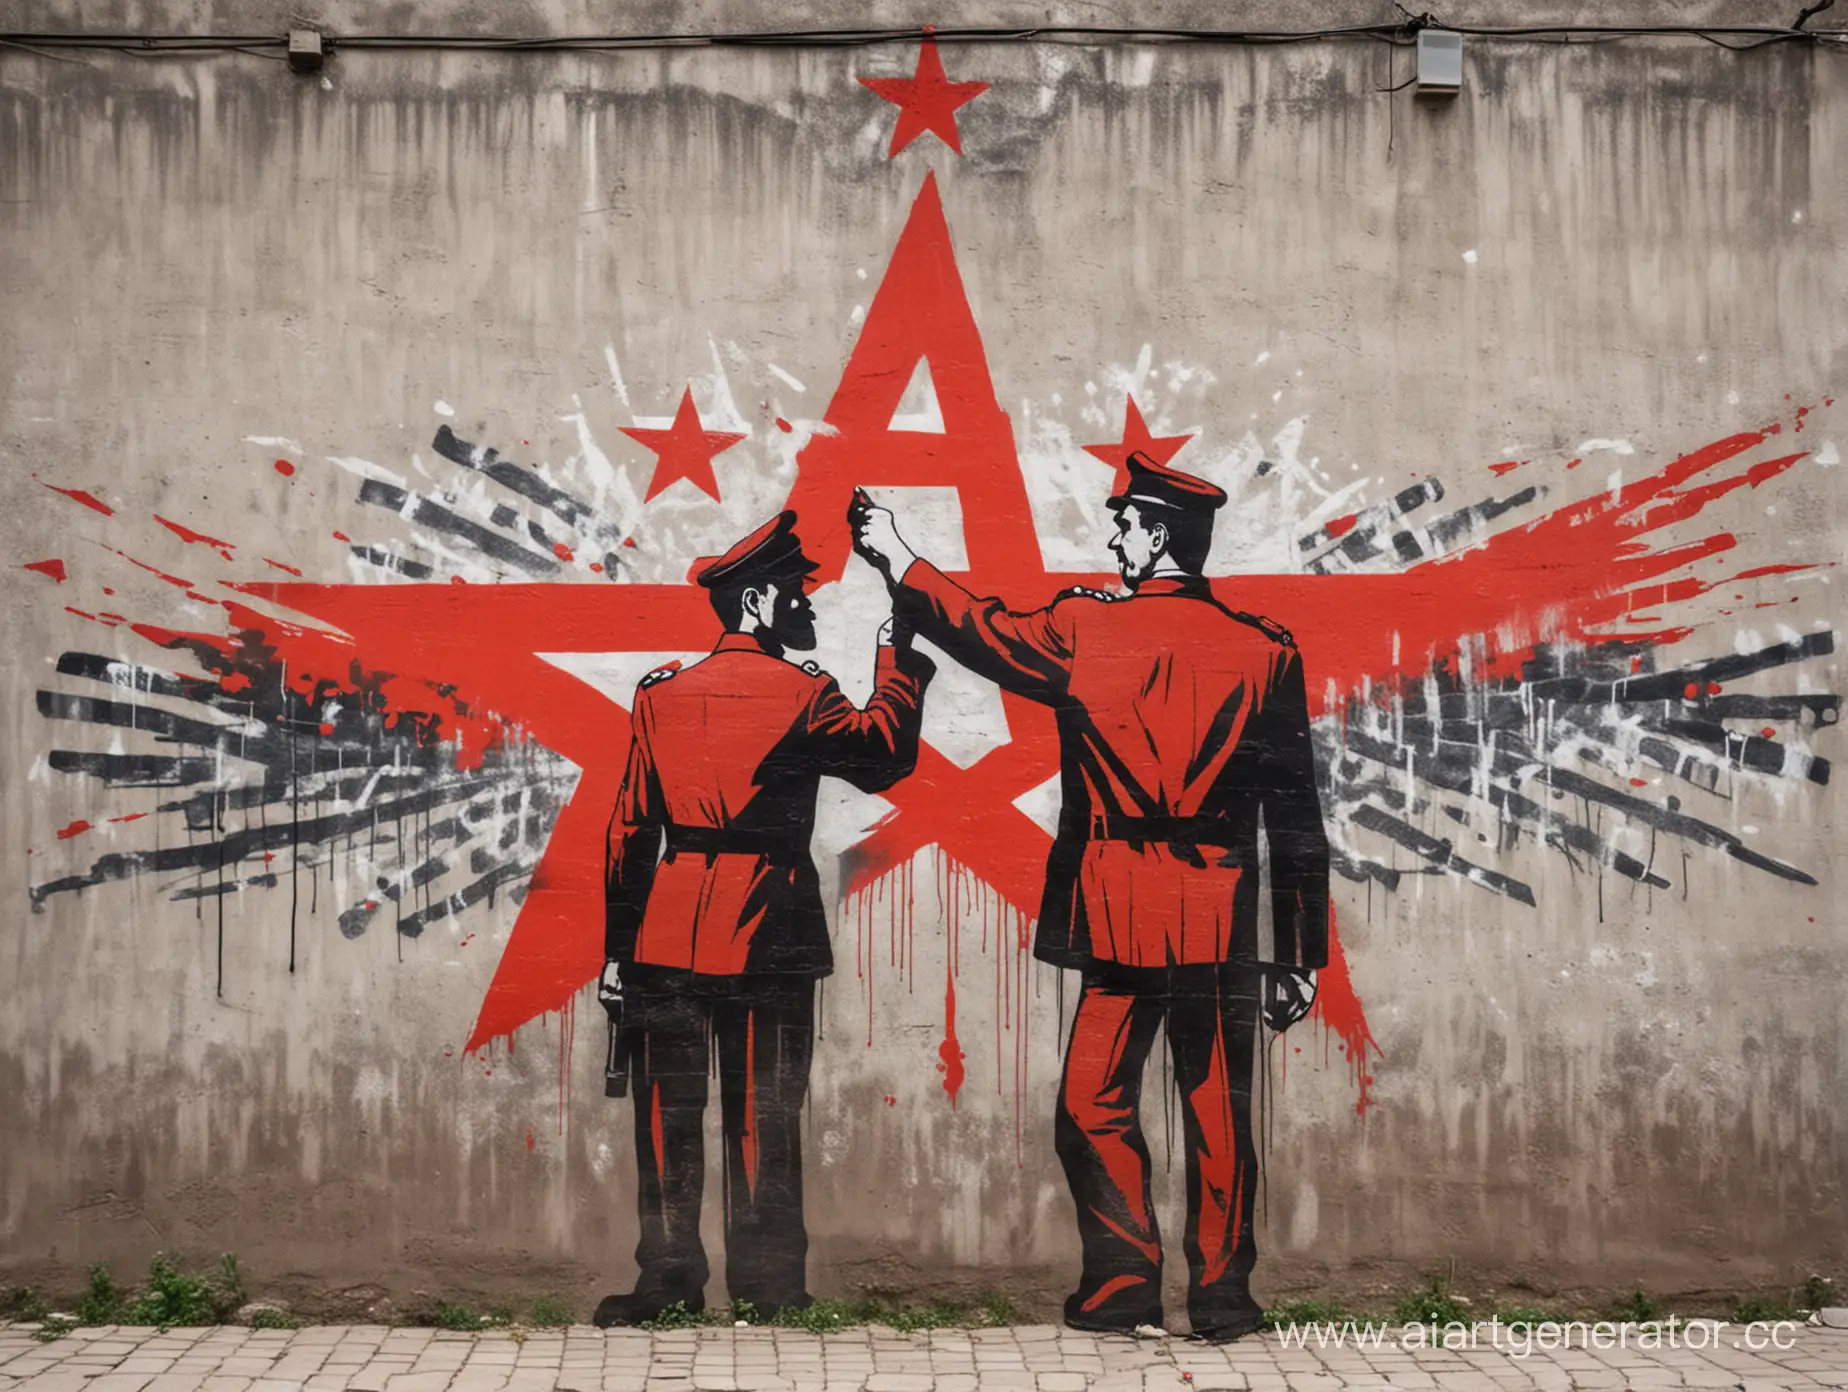 Vibrant-Graffiti-Celebrating-Communist-Unity